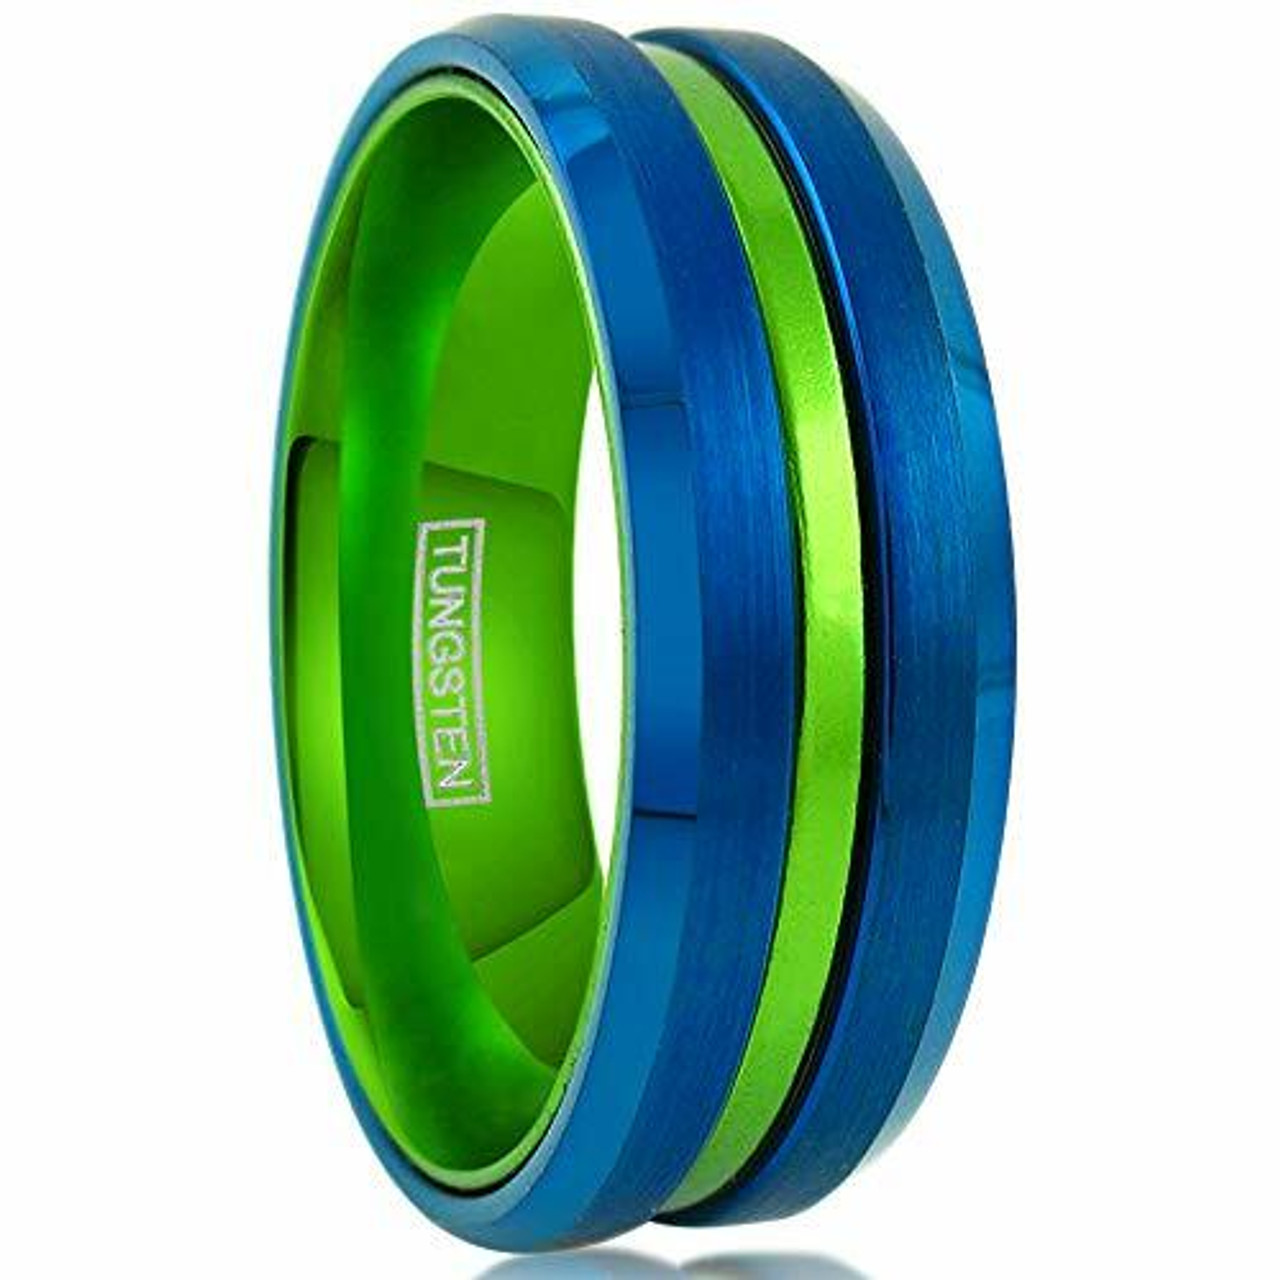 Men's Tungsten Wedding Band (8mm). Blue with Green Groove. Matte Finish Tungsten Carbide Ring. Beveled Edge